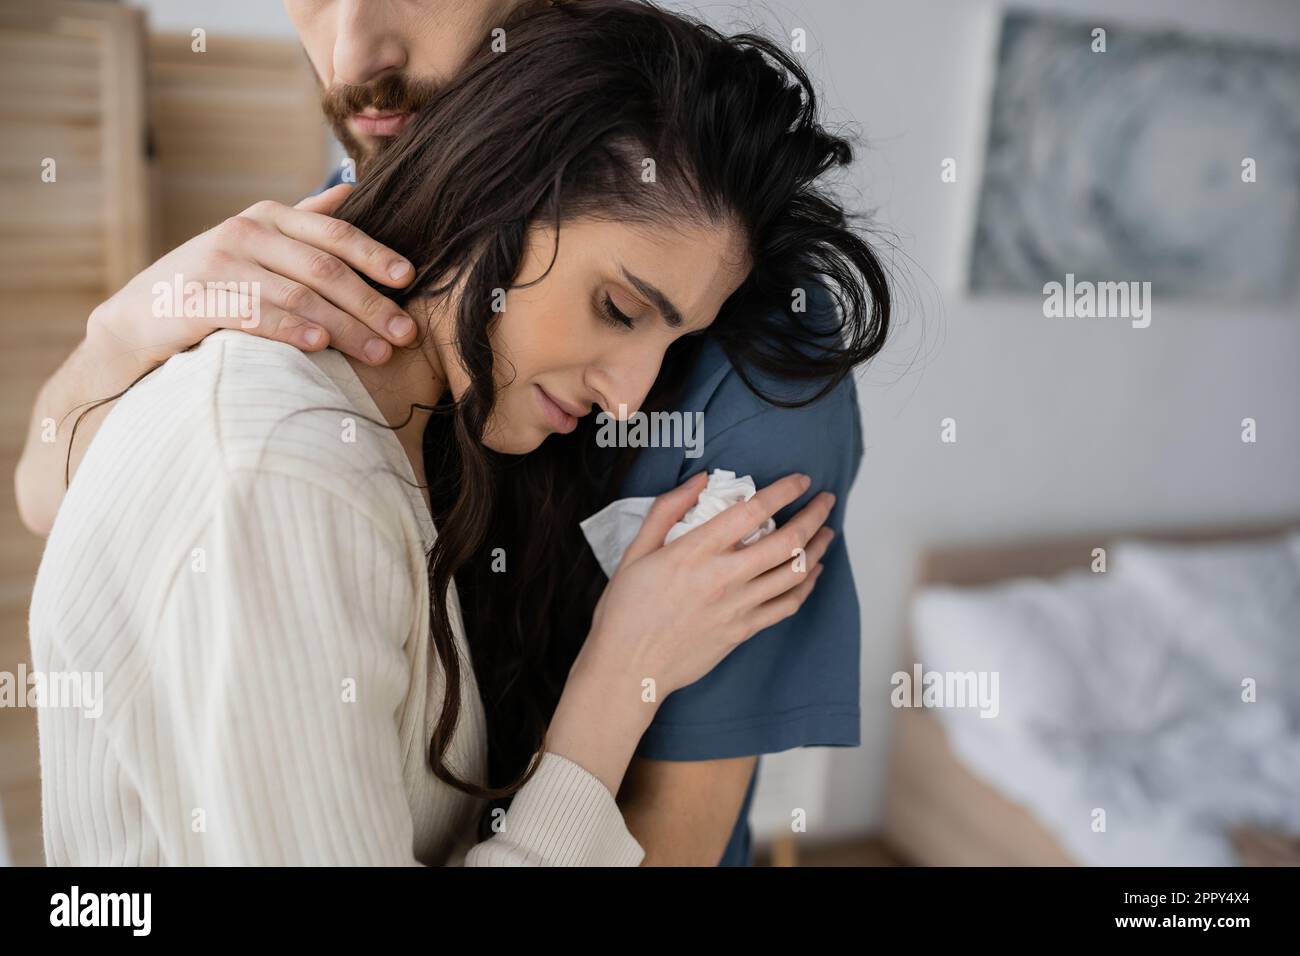 Bearded man calming sad girlfriend with napkin in blurred bedroom,stock image Stock Photo